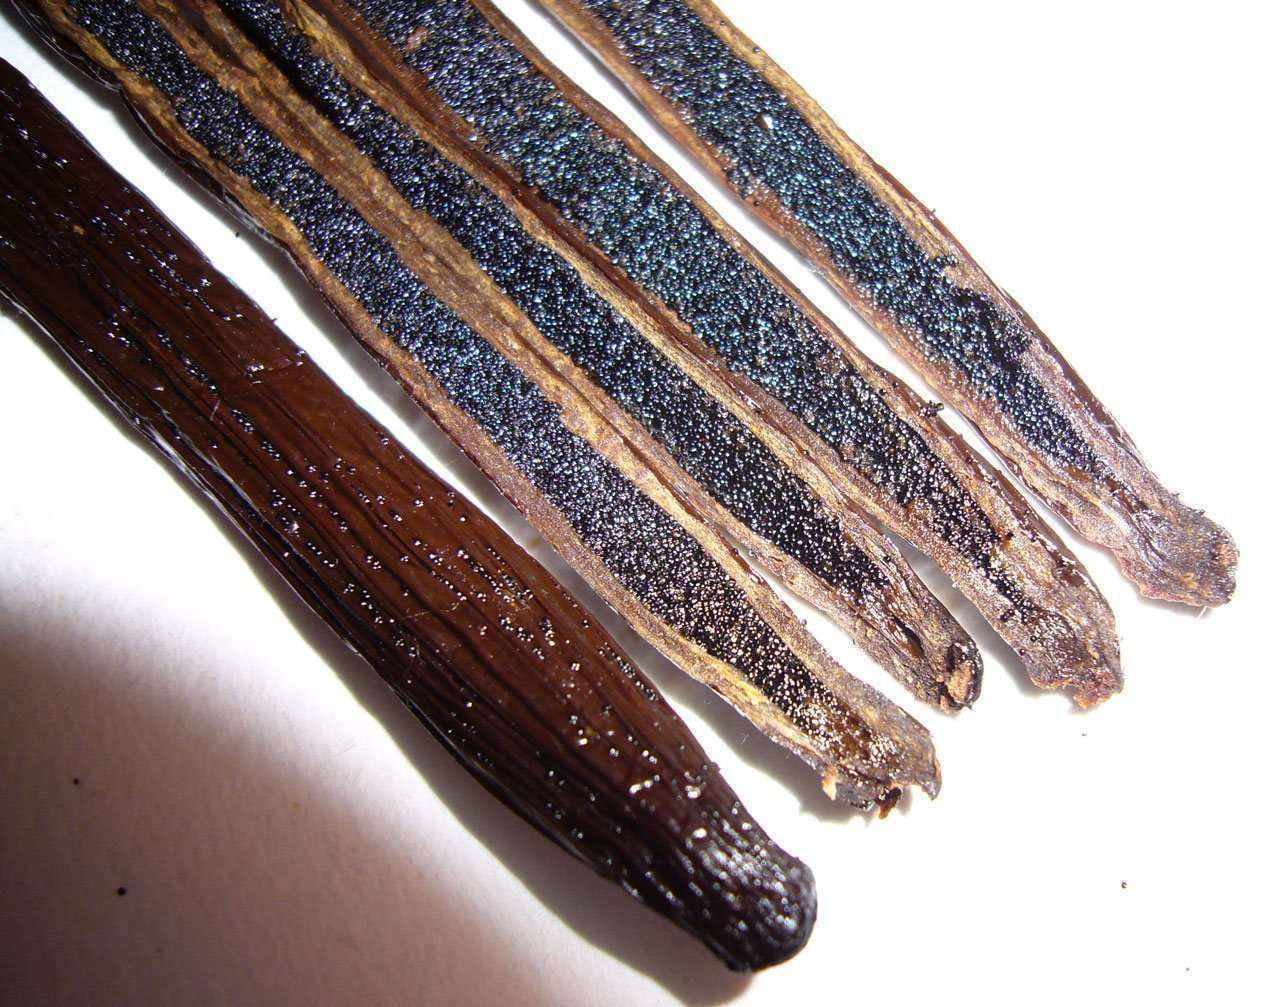 Image of four split vanilla beans